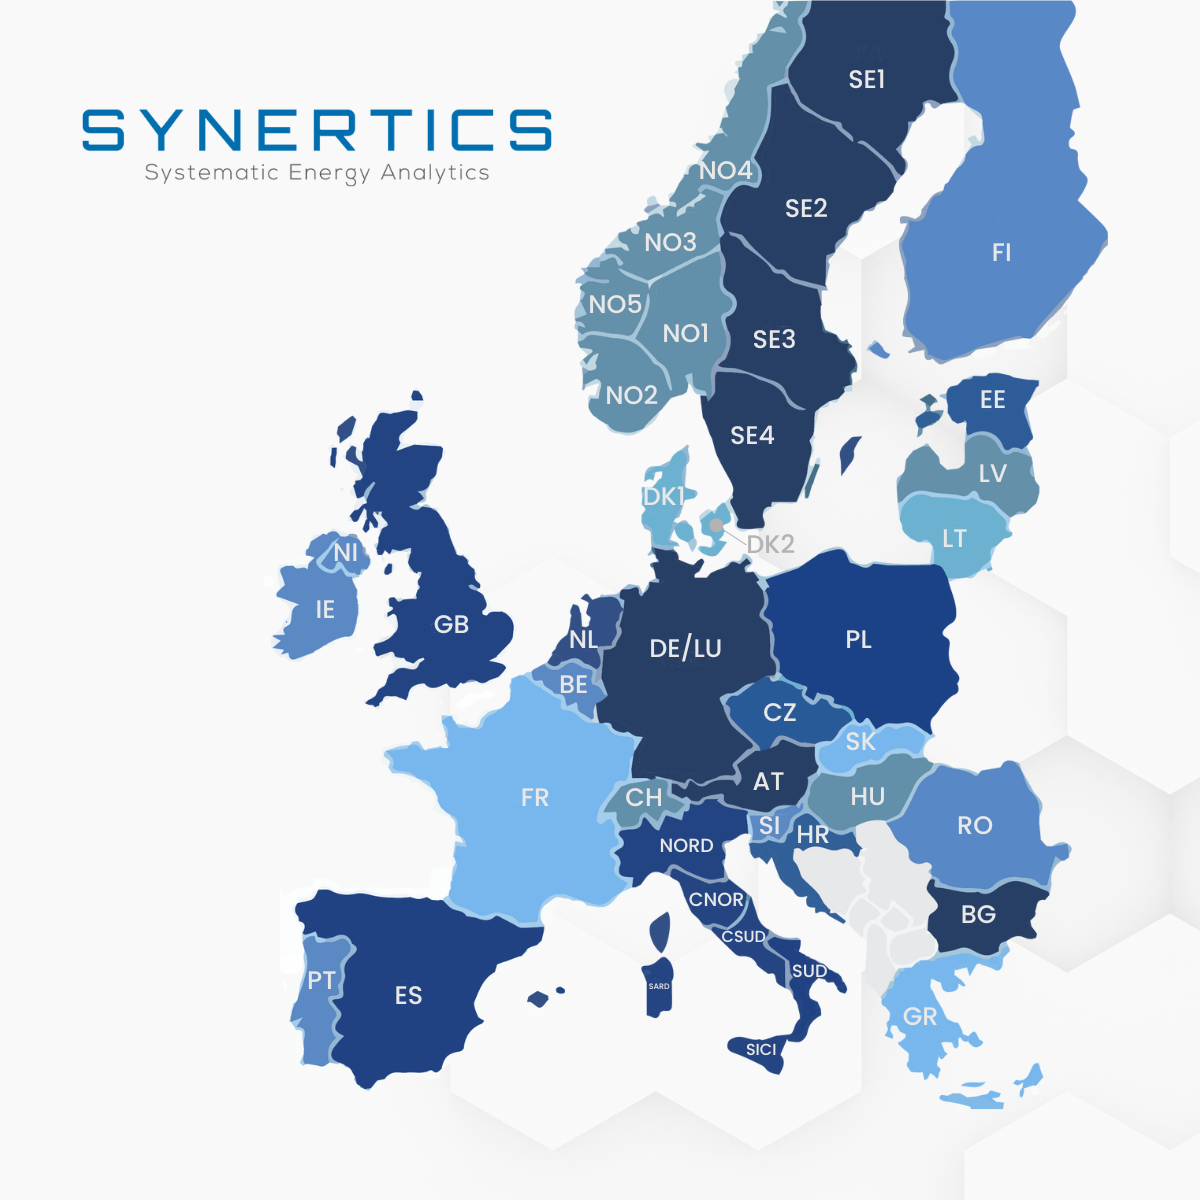 Bidding Zones in Europe according to ENTSO-E